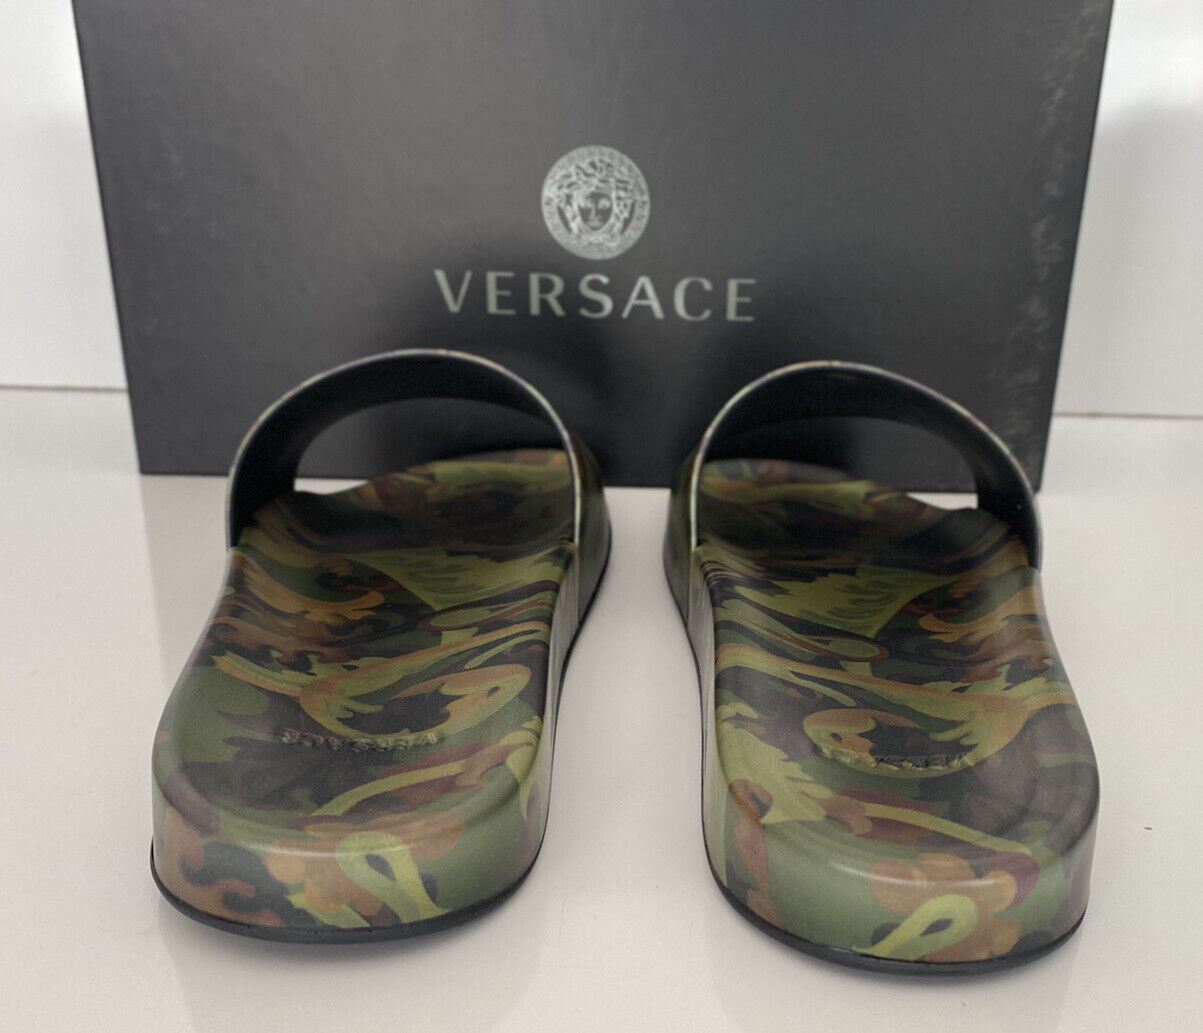 Сандалии-шлепанцы Versace Baroccoflage, цвет хаки 13, США, 395 долларов США (46 евро), IT DSU6516 